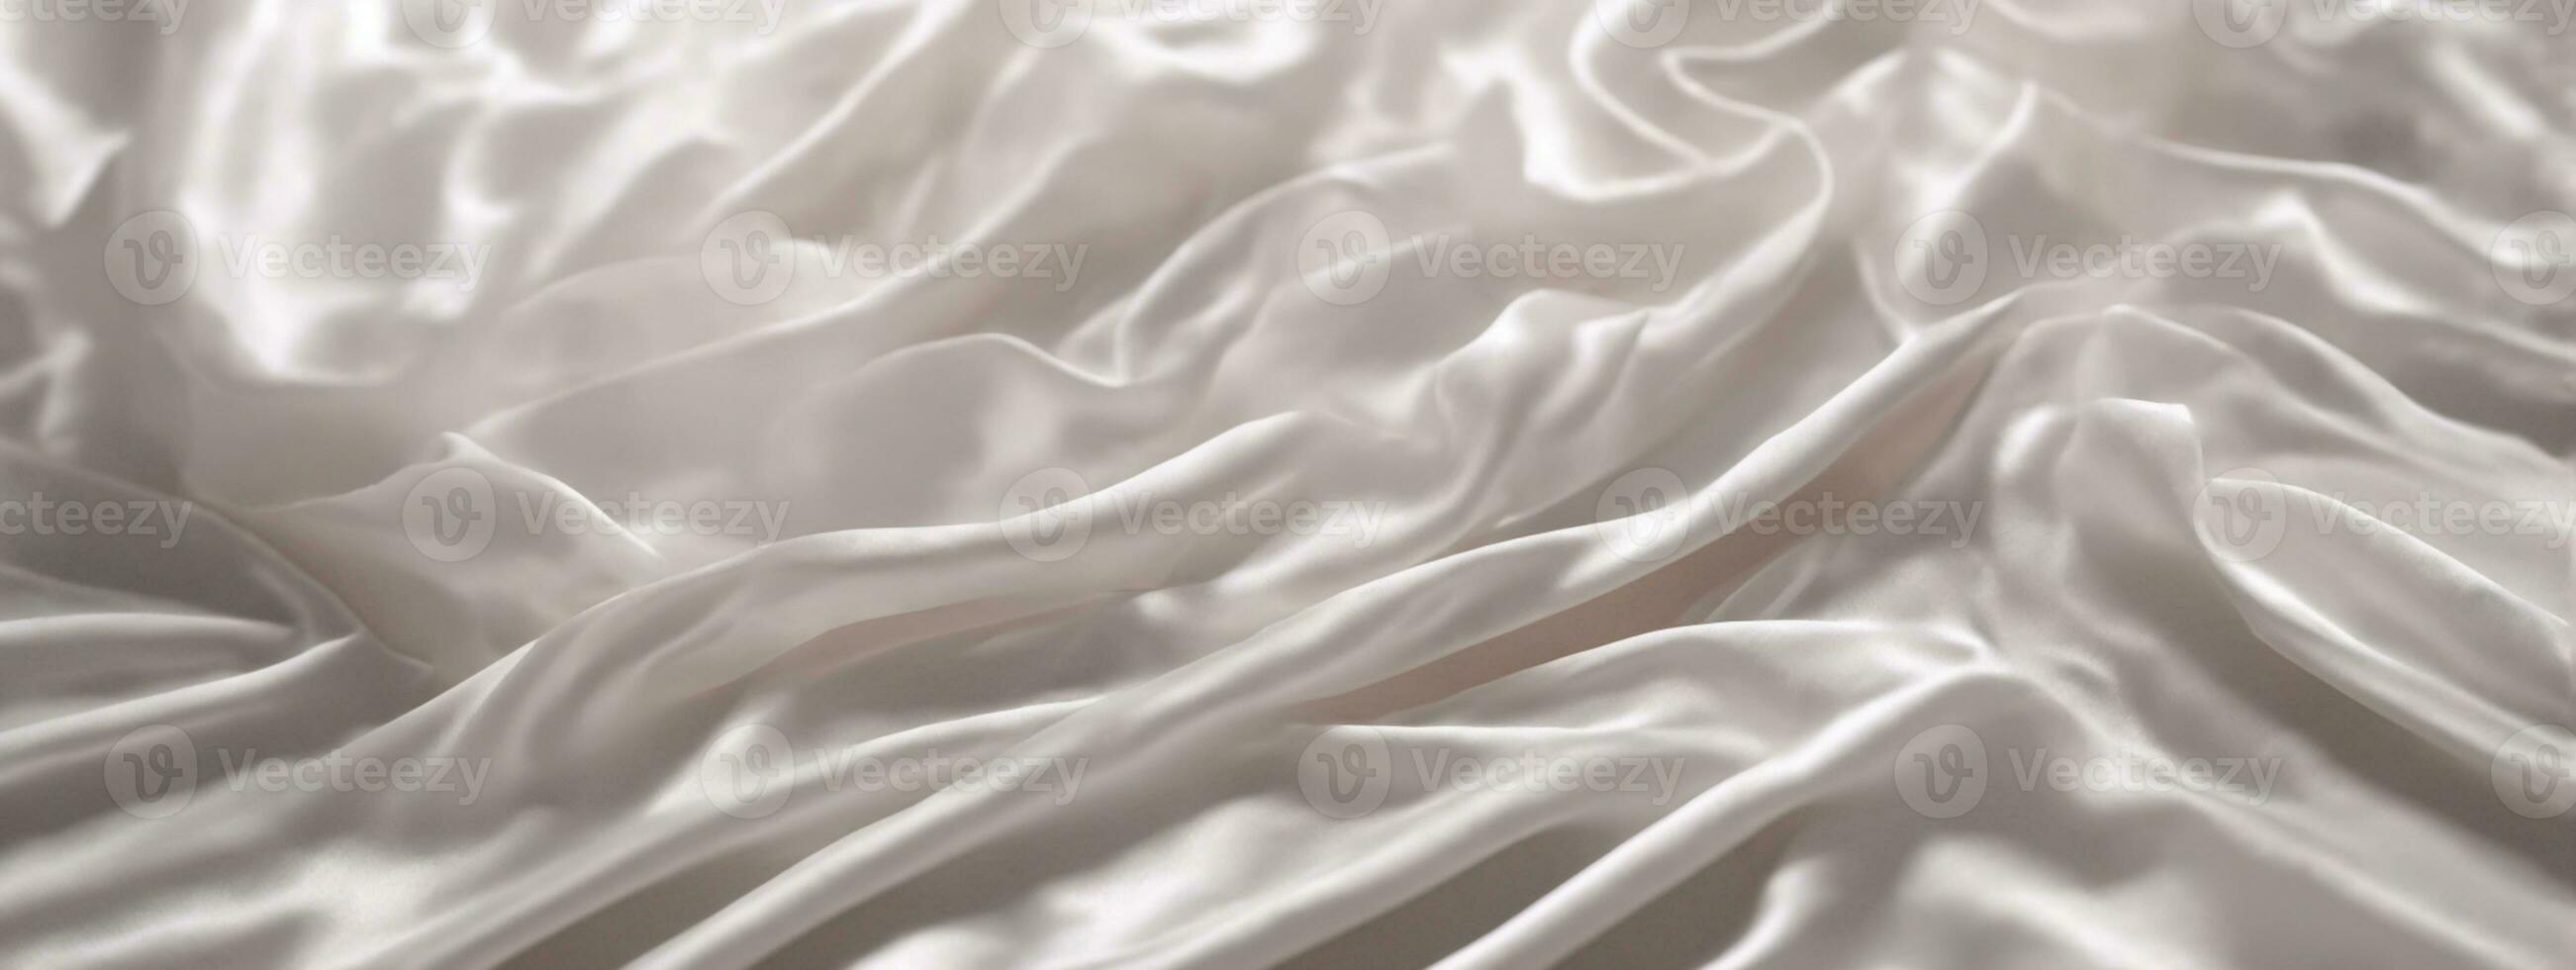 vit silke tyg textur lyxig bakgrund. ai genererad foto